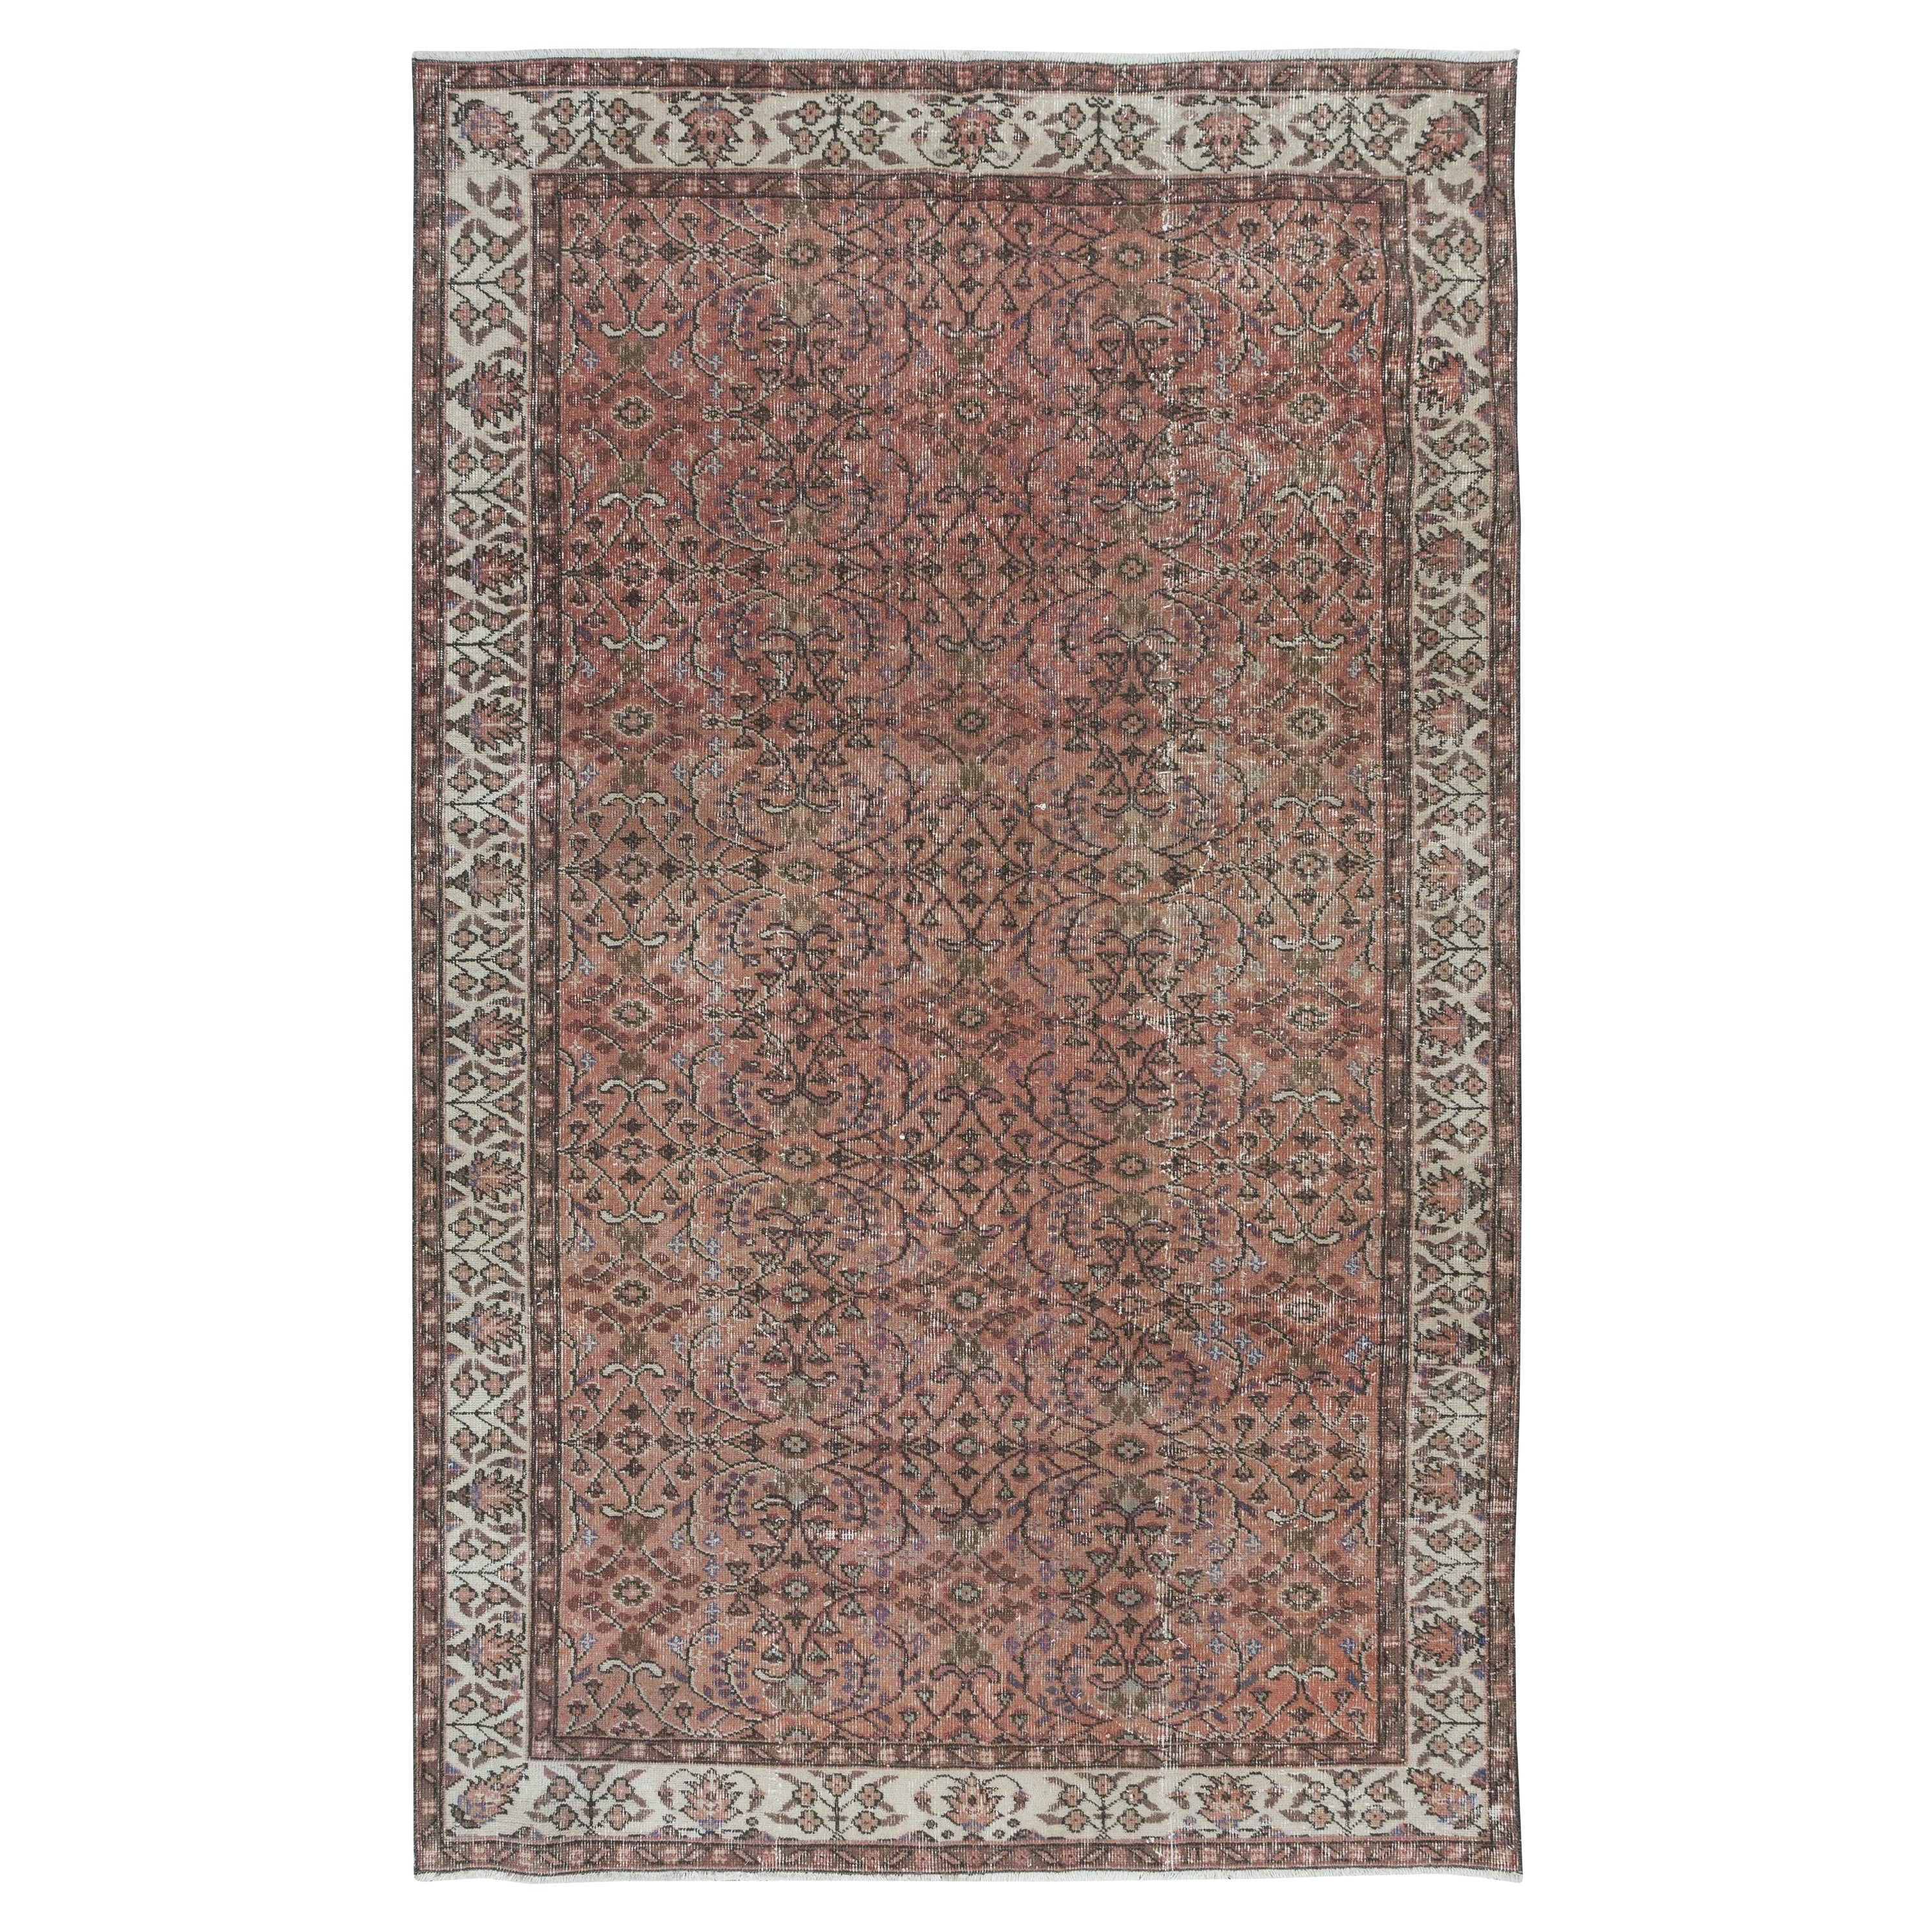 5.4x8.8 Ft Vintage Turkish Area Rug in Red & Beige, Hand Knotted Floral Carpet